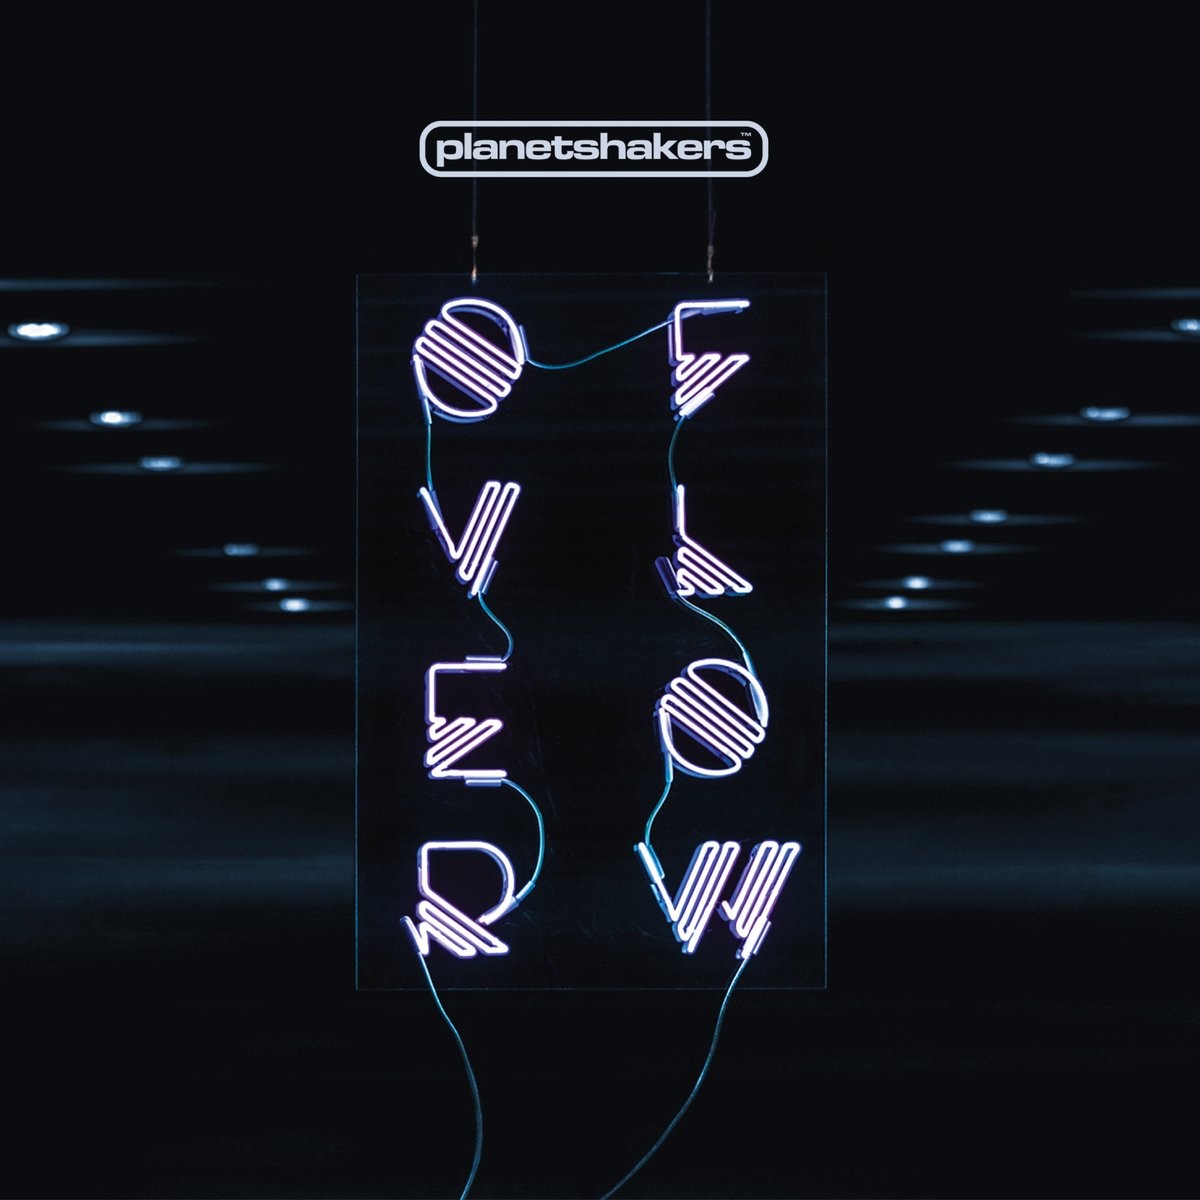 Overflow (live) CD/DVD